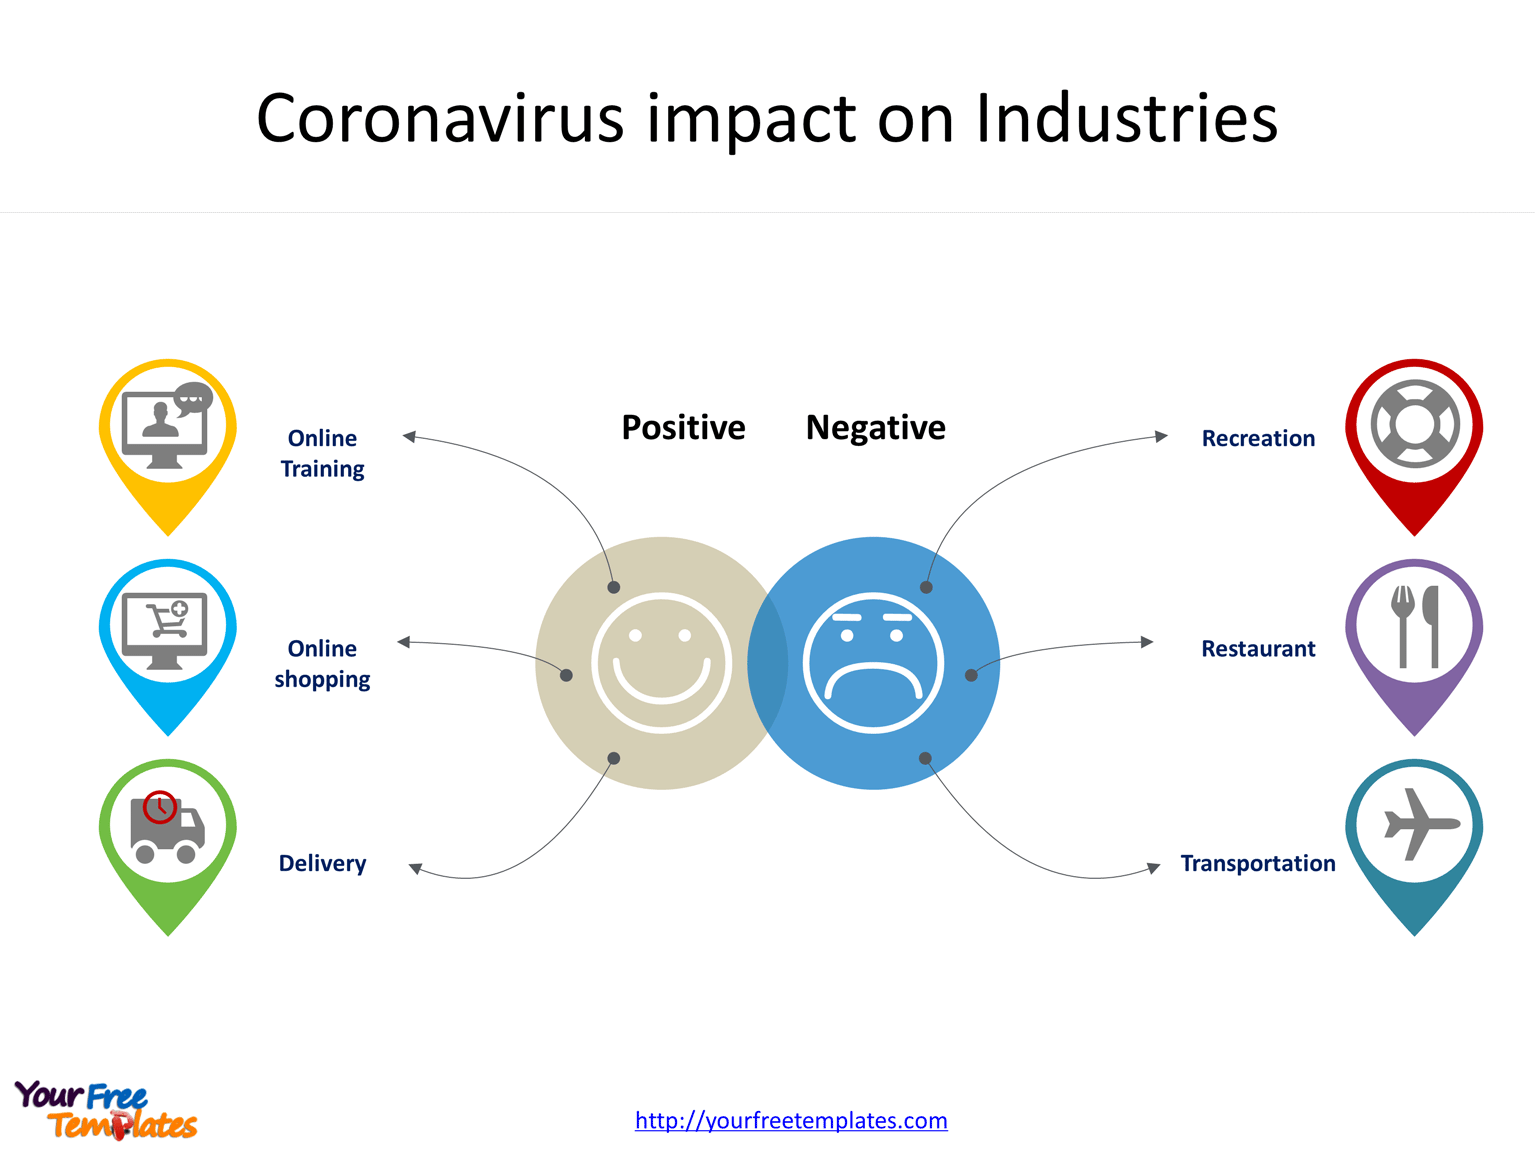 Coronavirus impact infographic on the international market